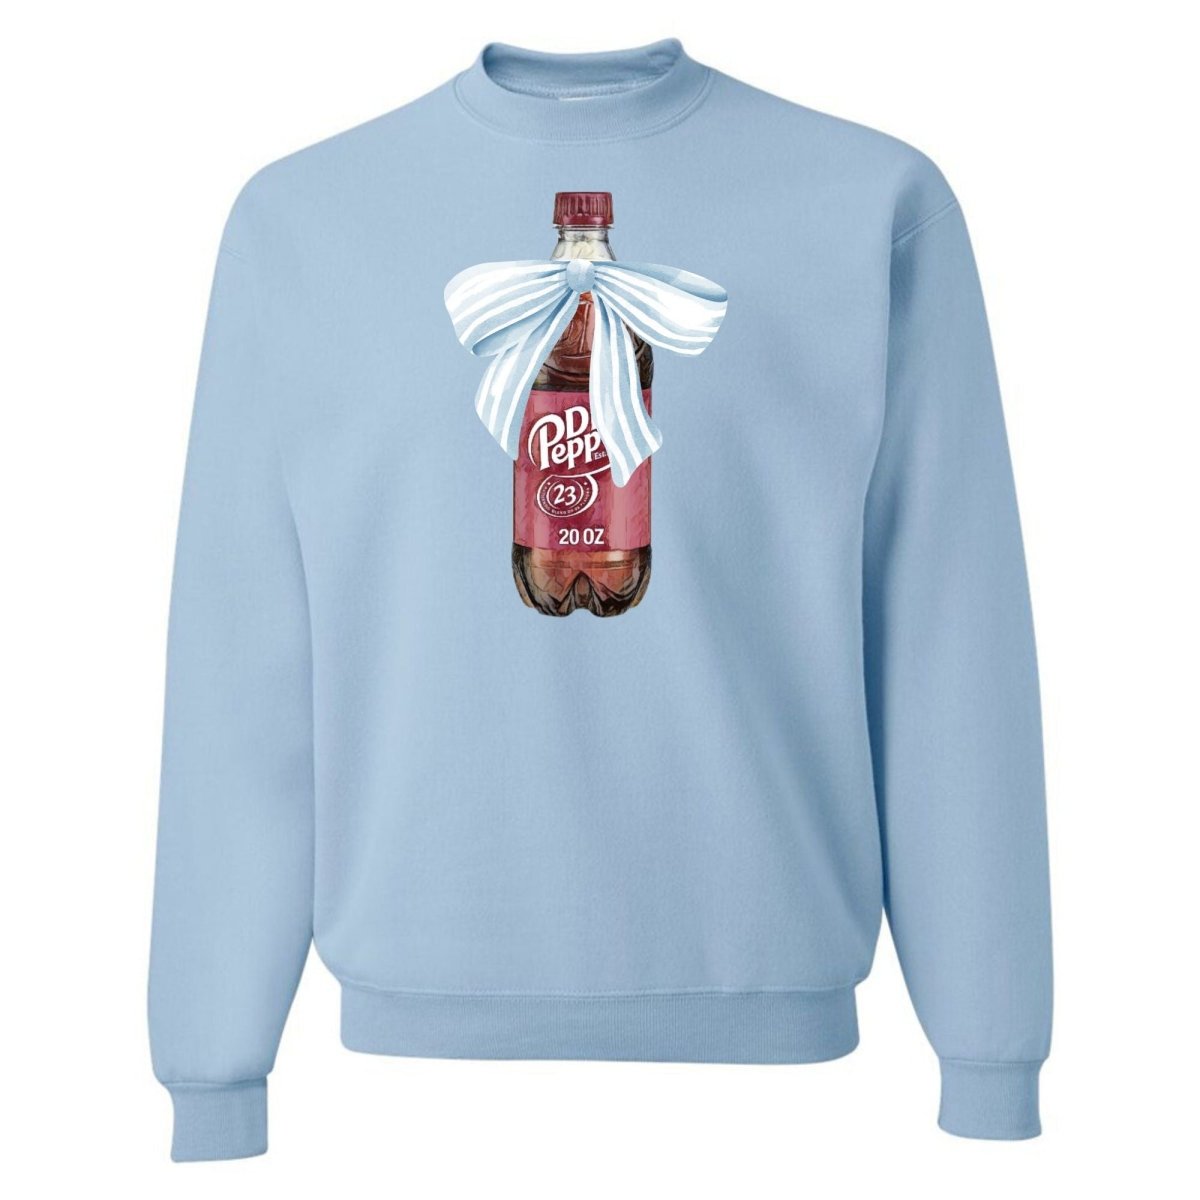 'Vintage Soda With Bow' Crewneck Sweatshirt - United Monograms